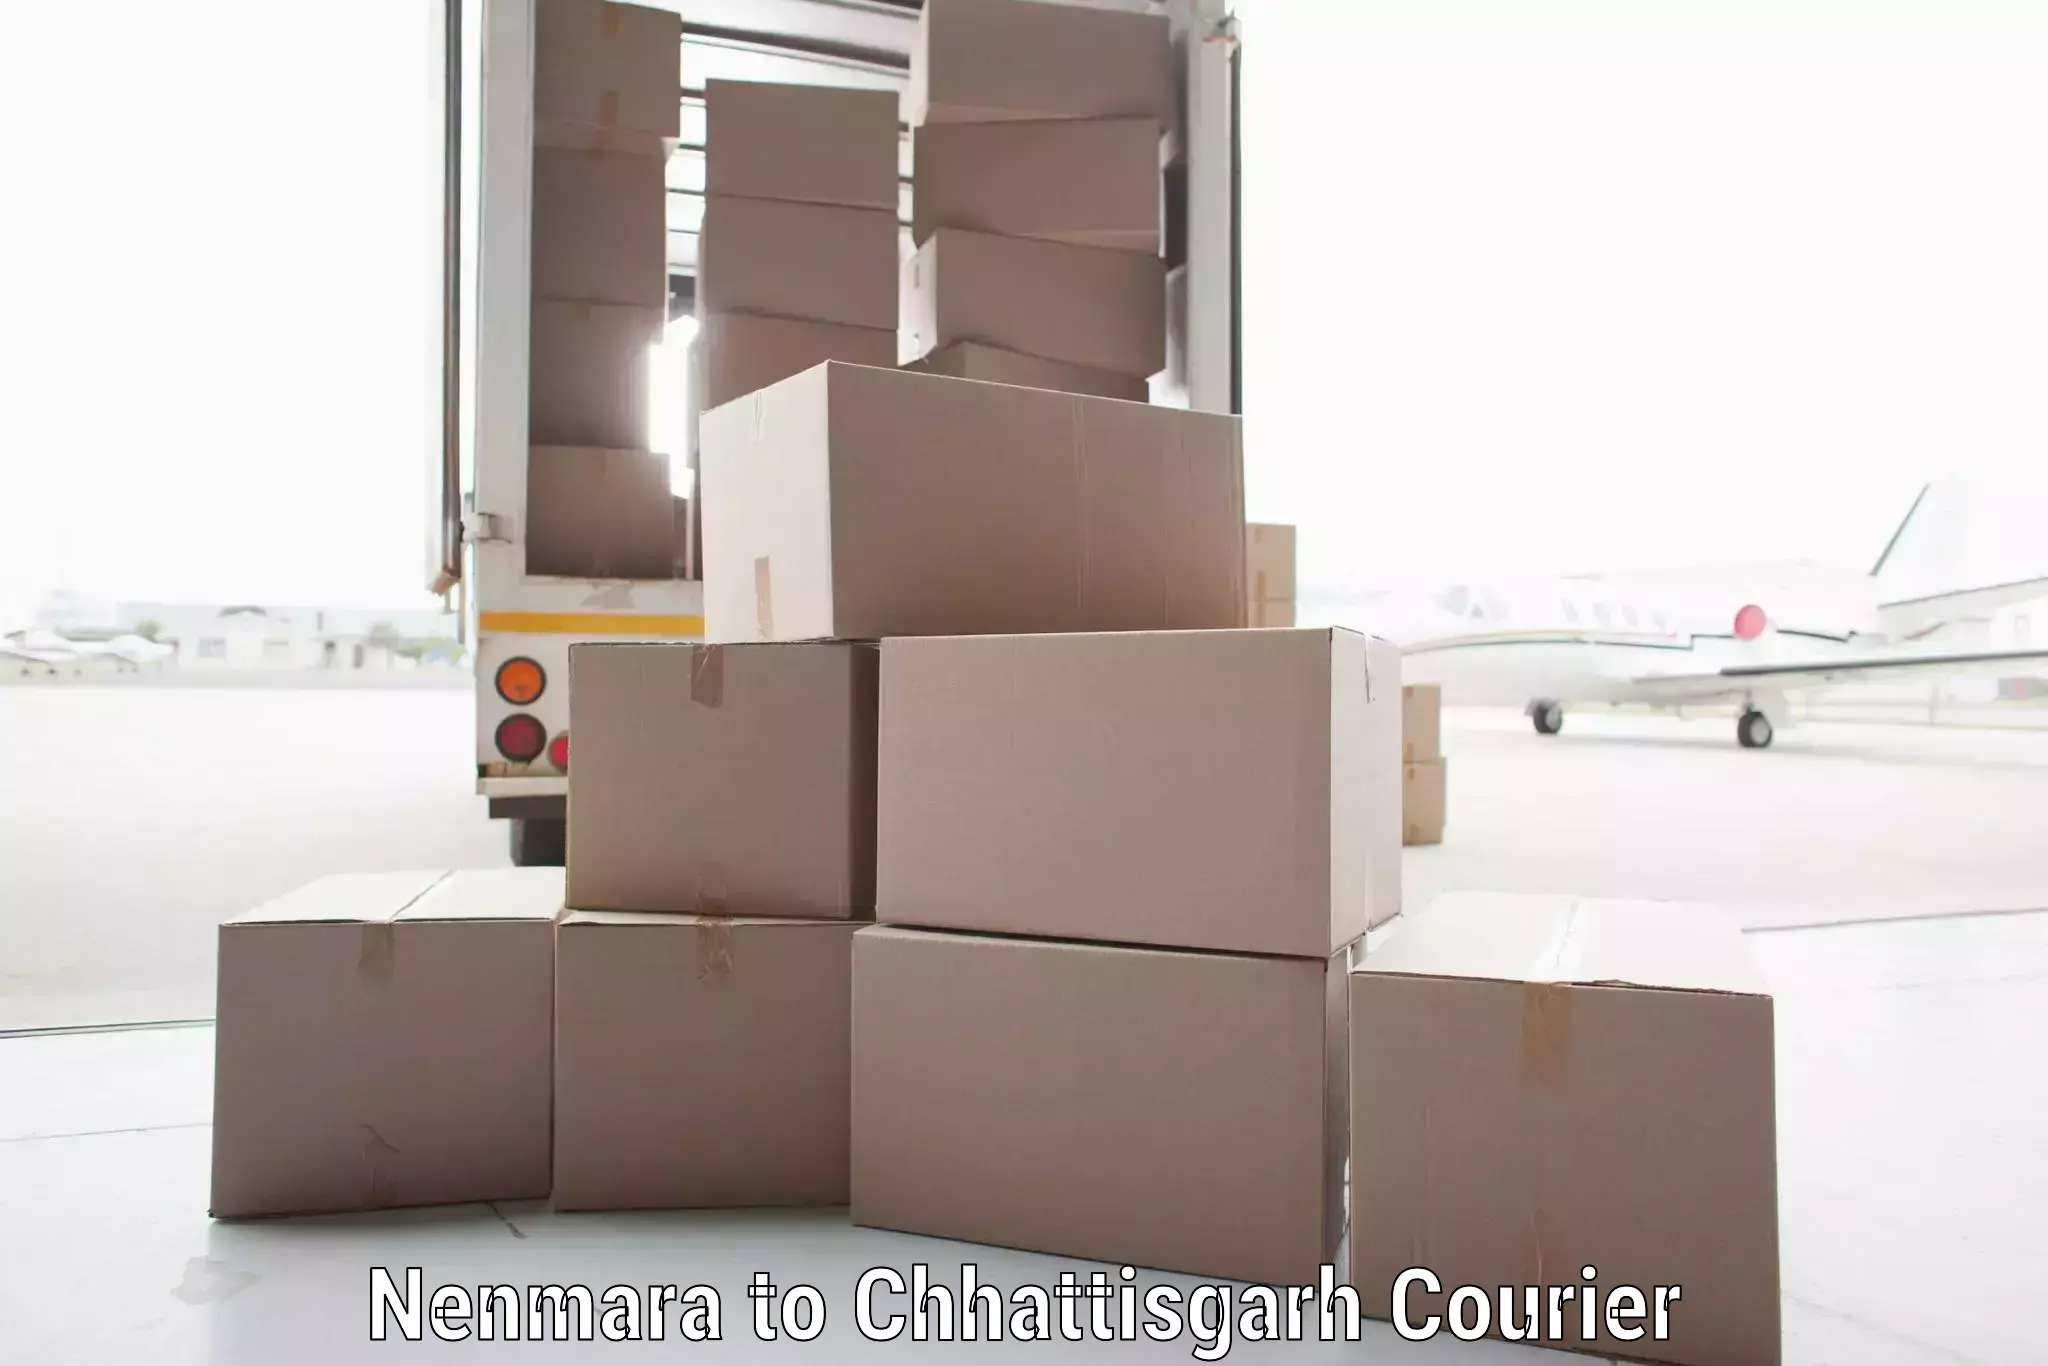 On-demand shipping options Nenmara to Patna Chhattisgarh